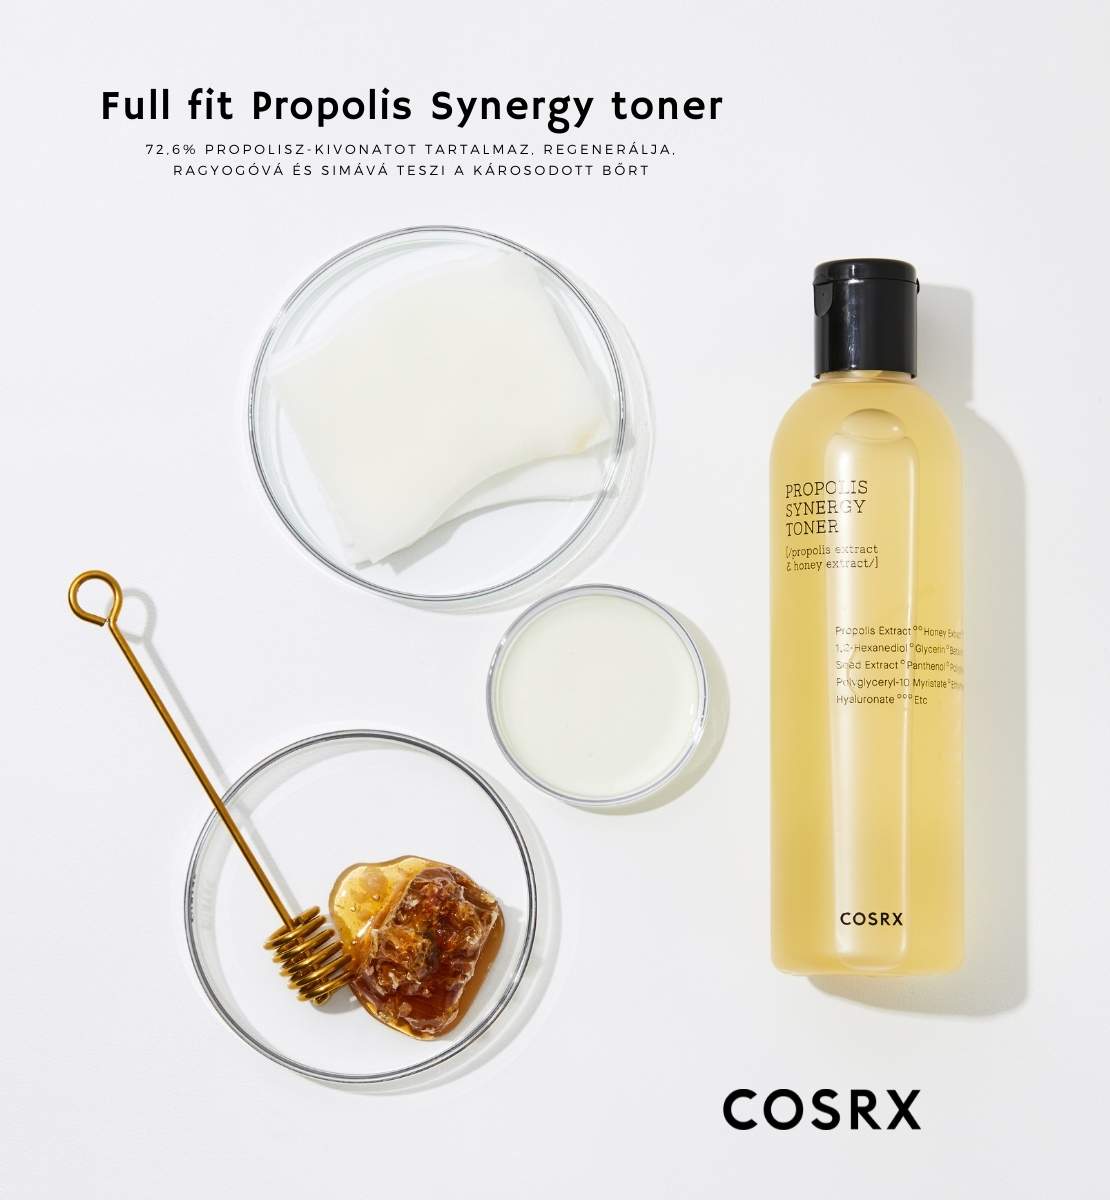 COSRX-full-fit-propolis-syergy-toner-leiras-01